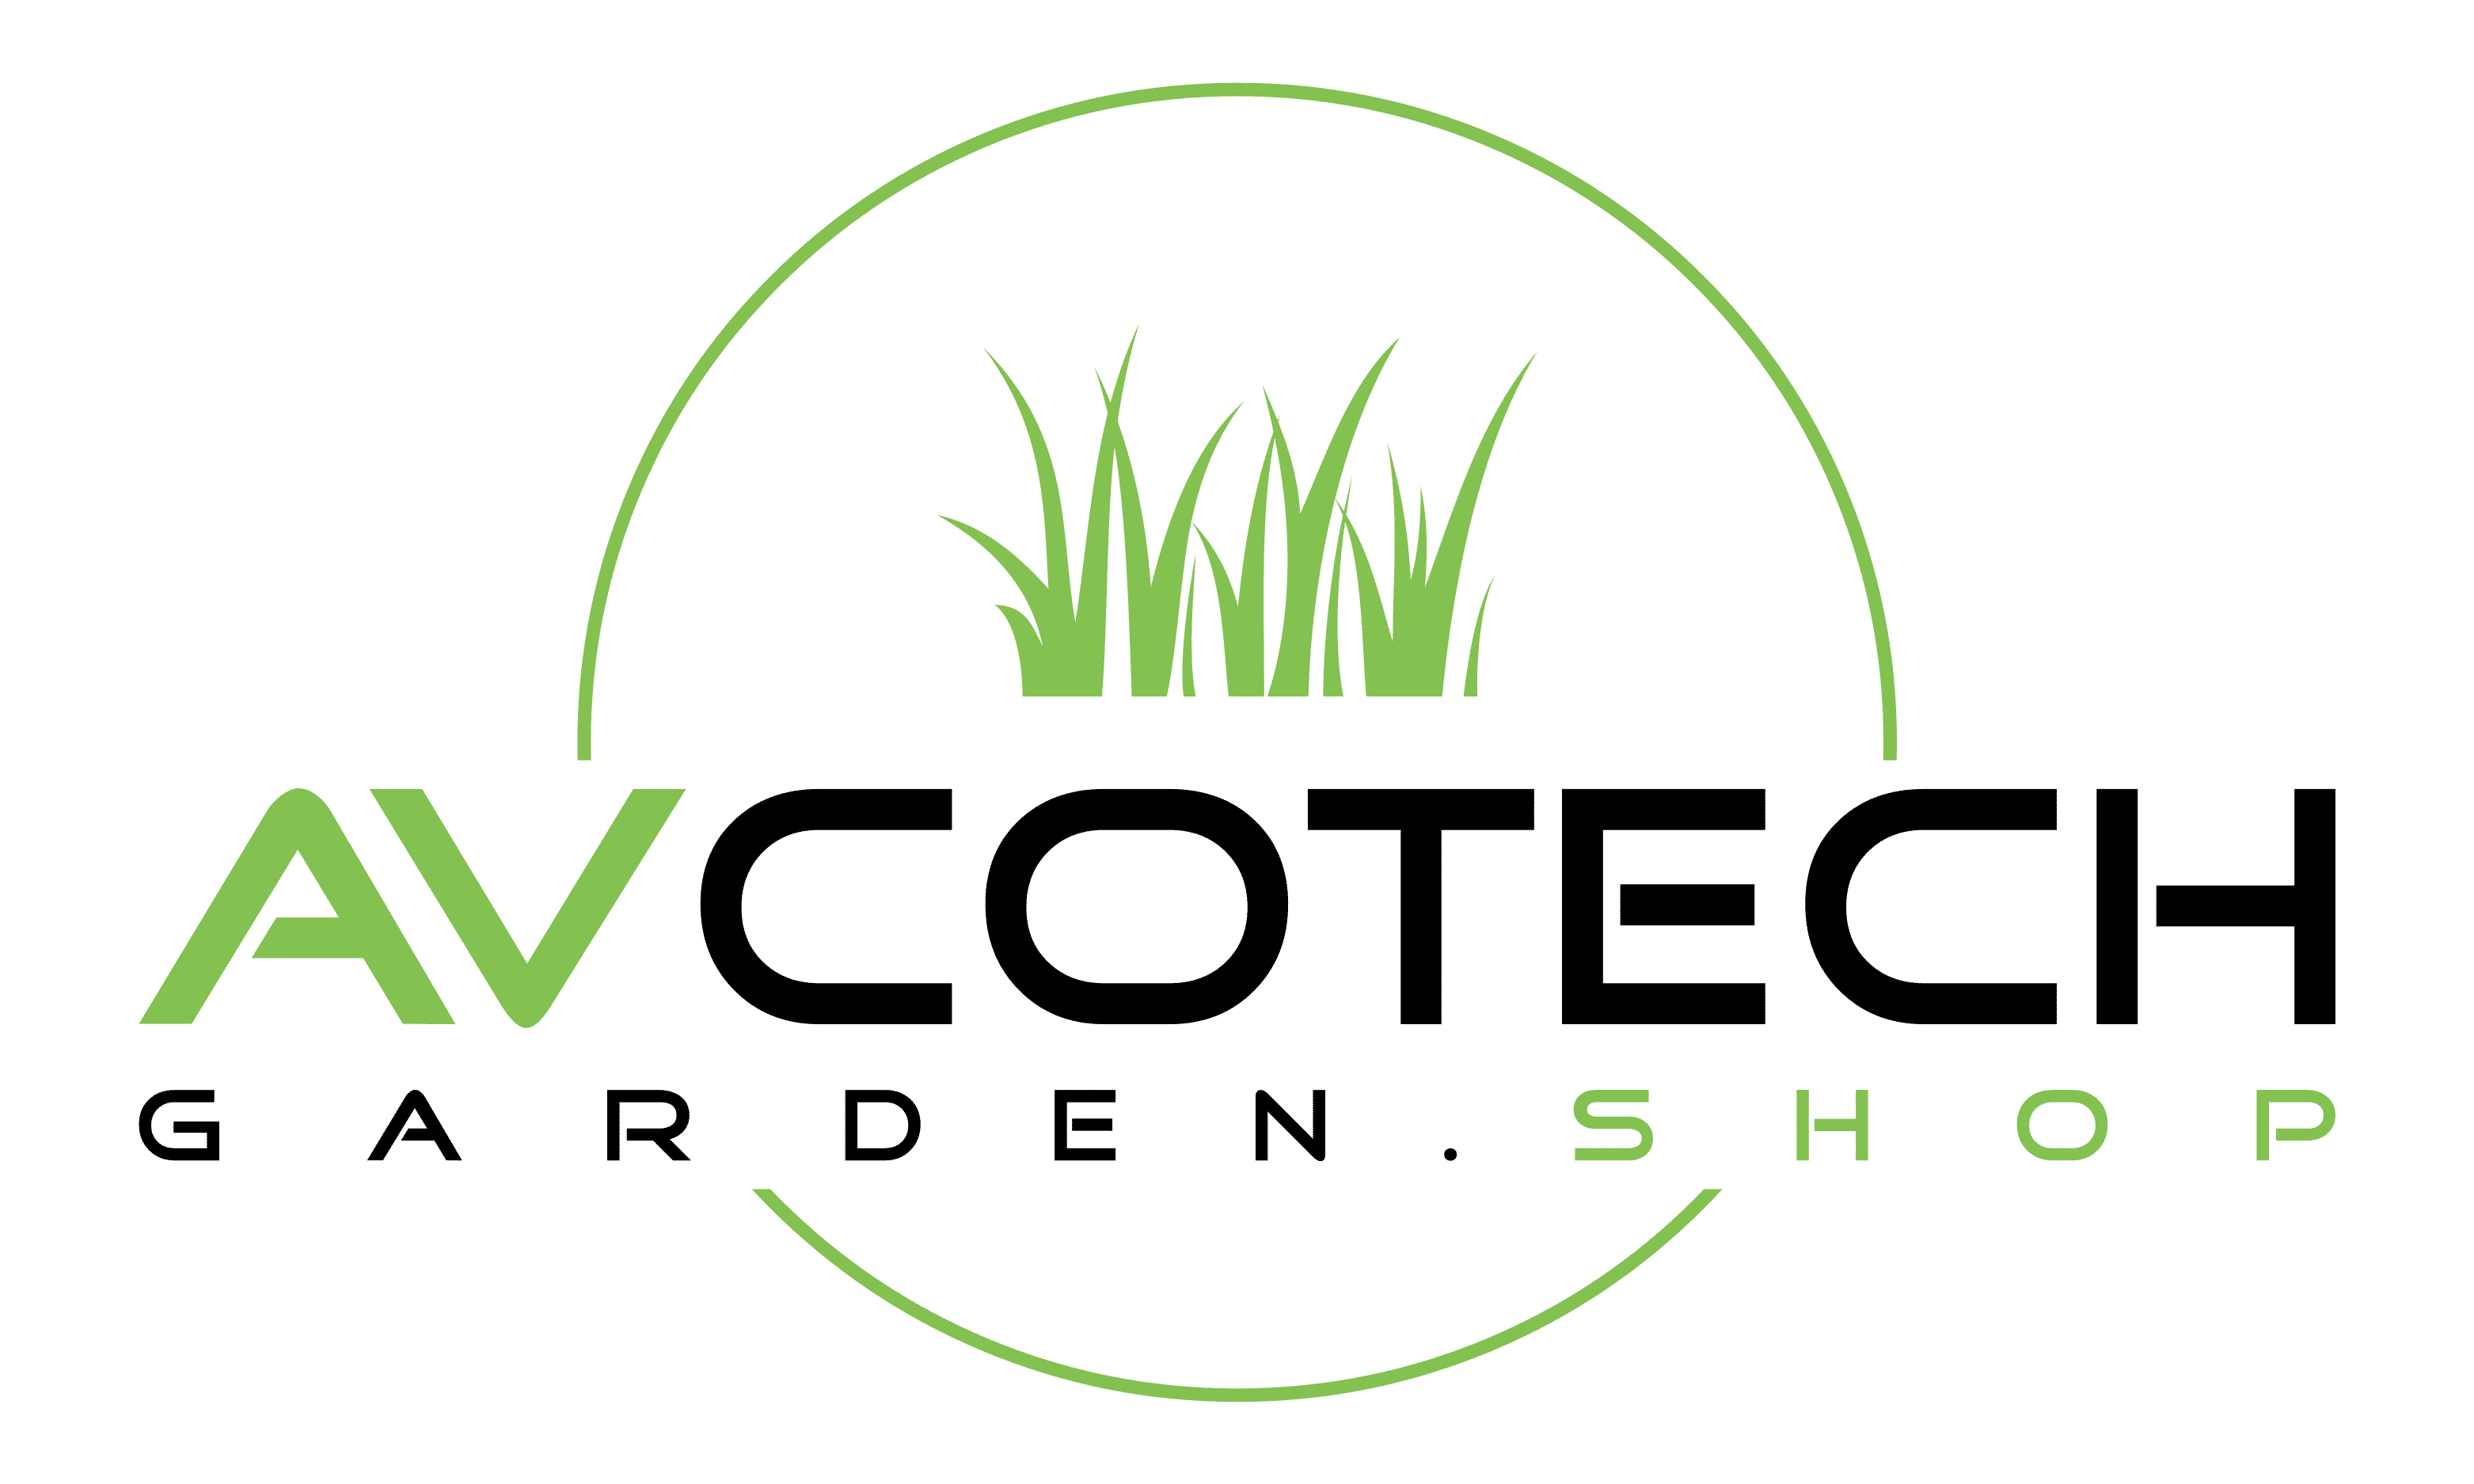 Avcotech Garden Shop